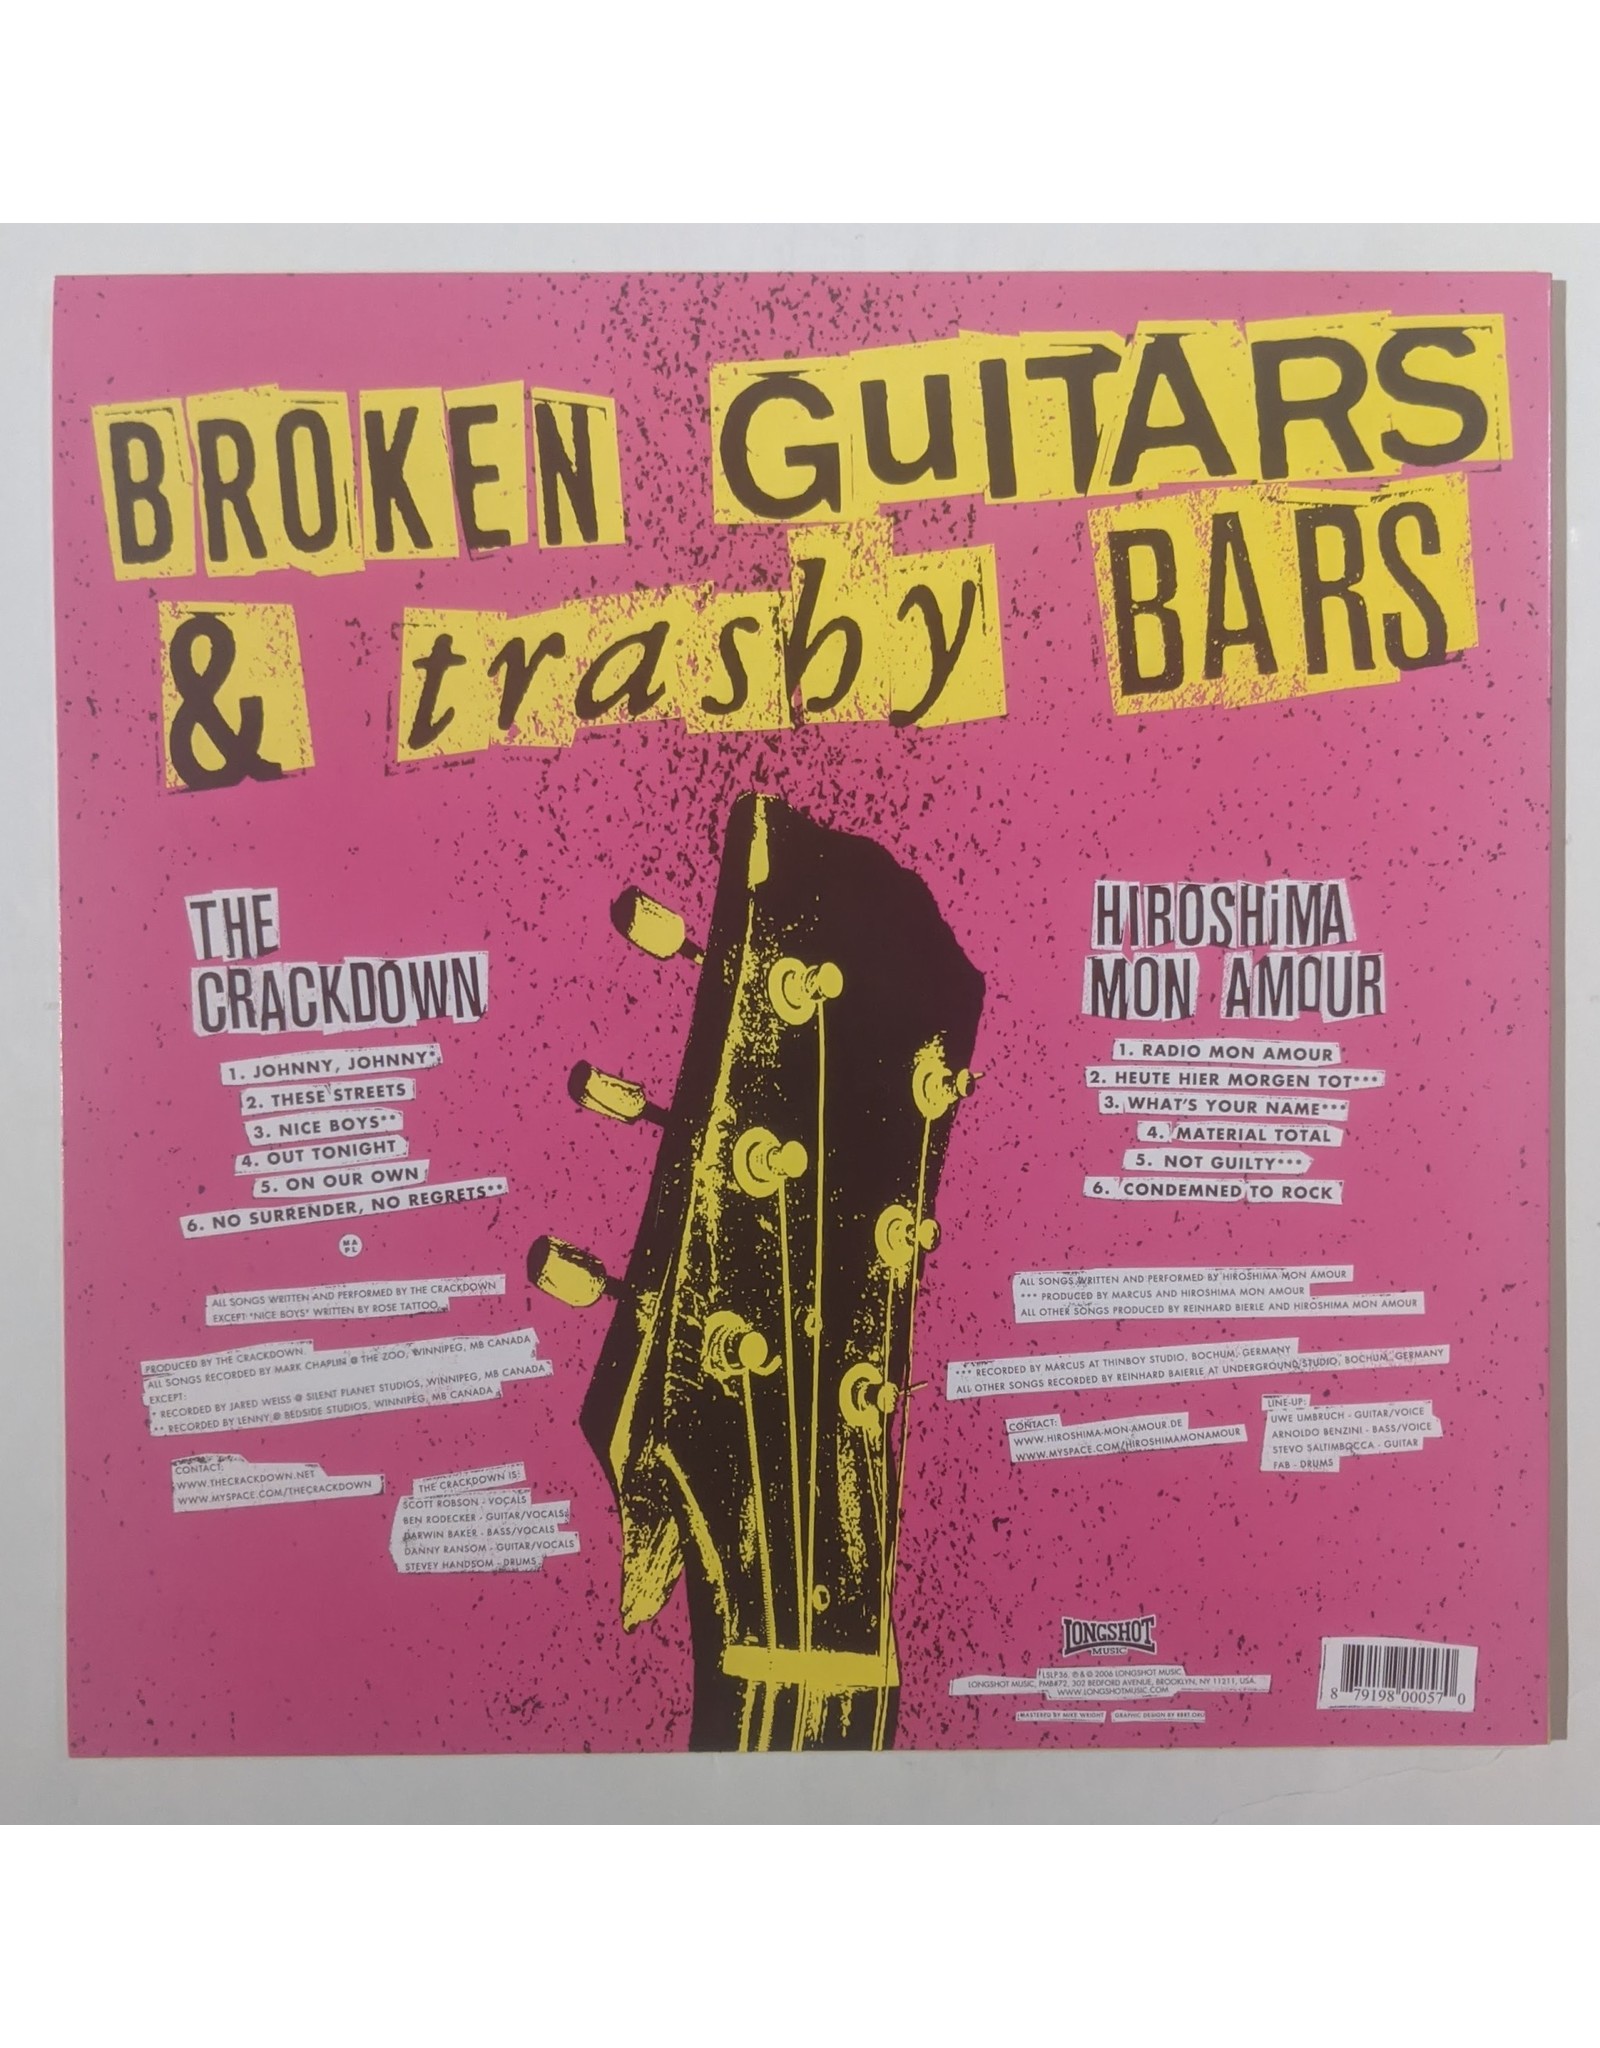 USED: The Crackdown vs. Hiroshima Mon Amour: Broken Guitars & Trashy Bars LP